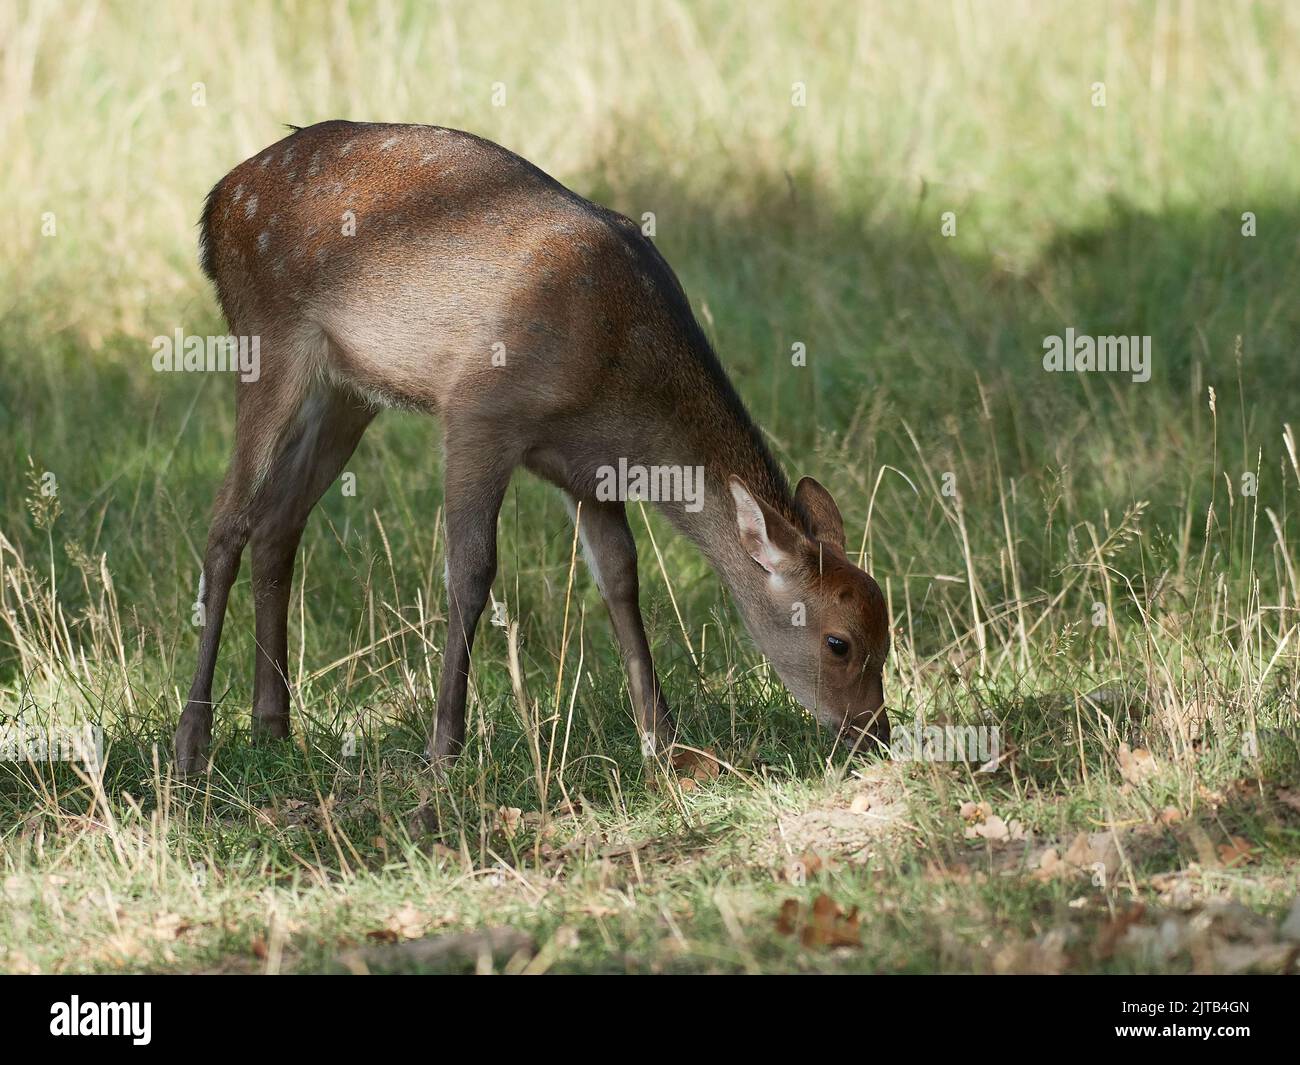 Sika deer in its natural habitat in Denmark Stock Photo